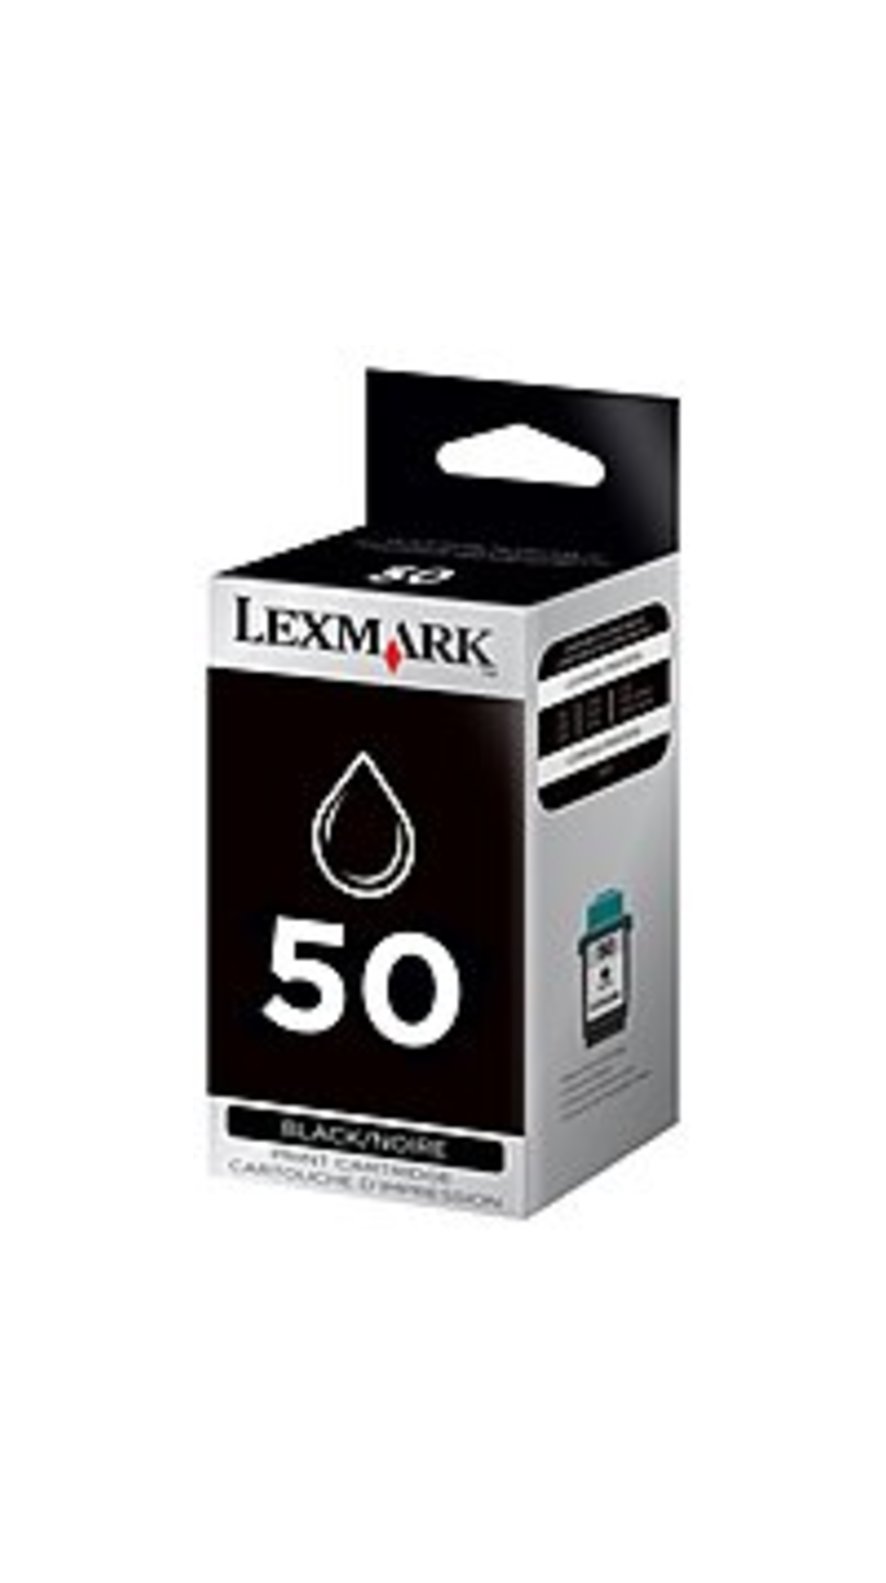 Lexmark 17G0050 No. 50 High Resolution Print Cartridge for Z12, Z22, and Z32 Printers - Black